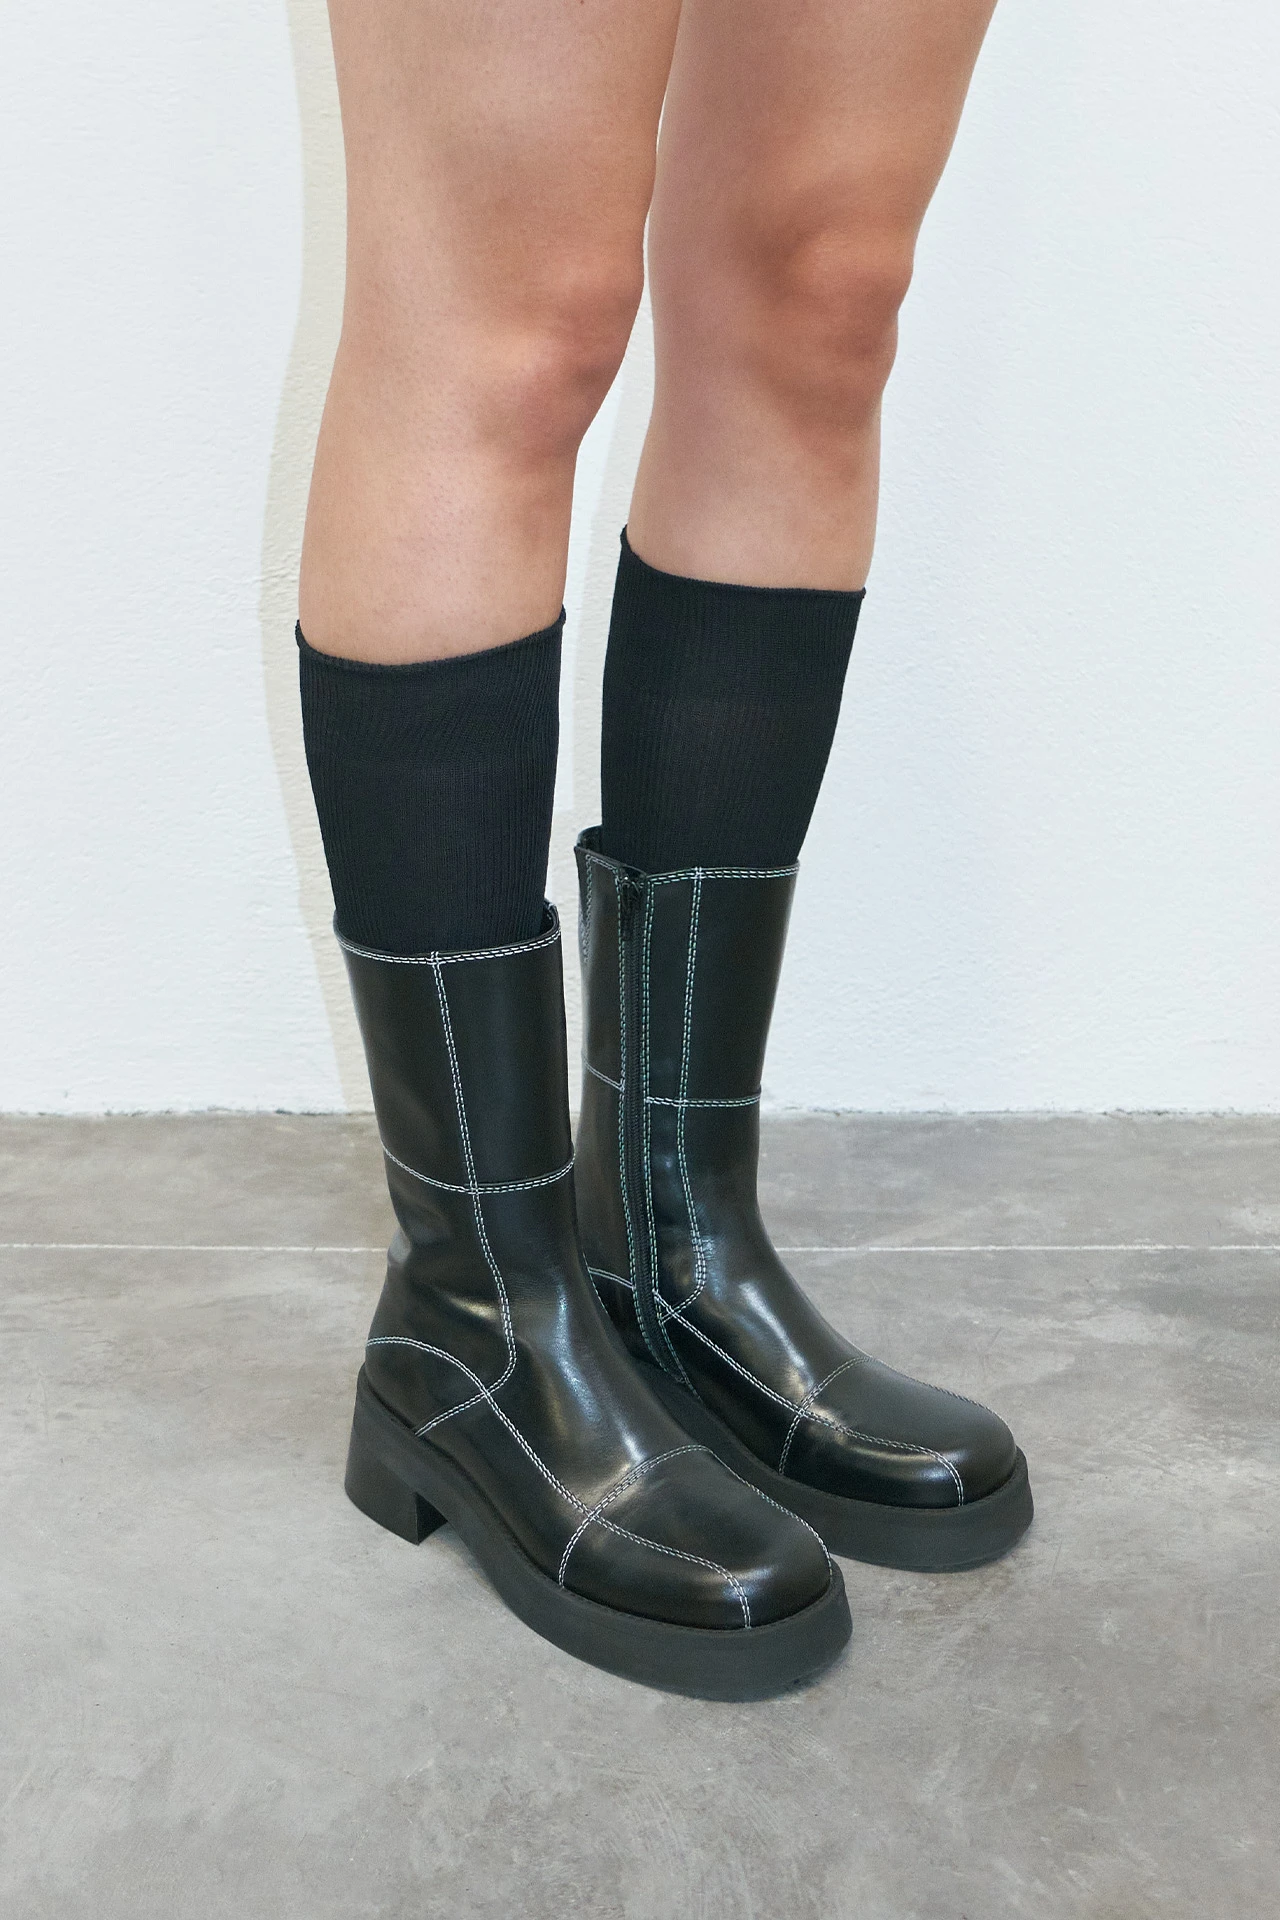 EC-E8-heya-black-boots-01